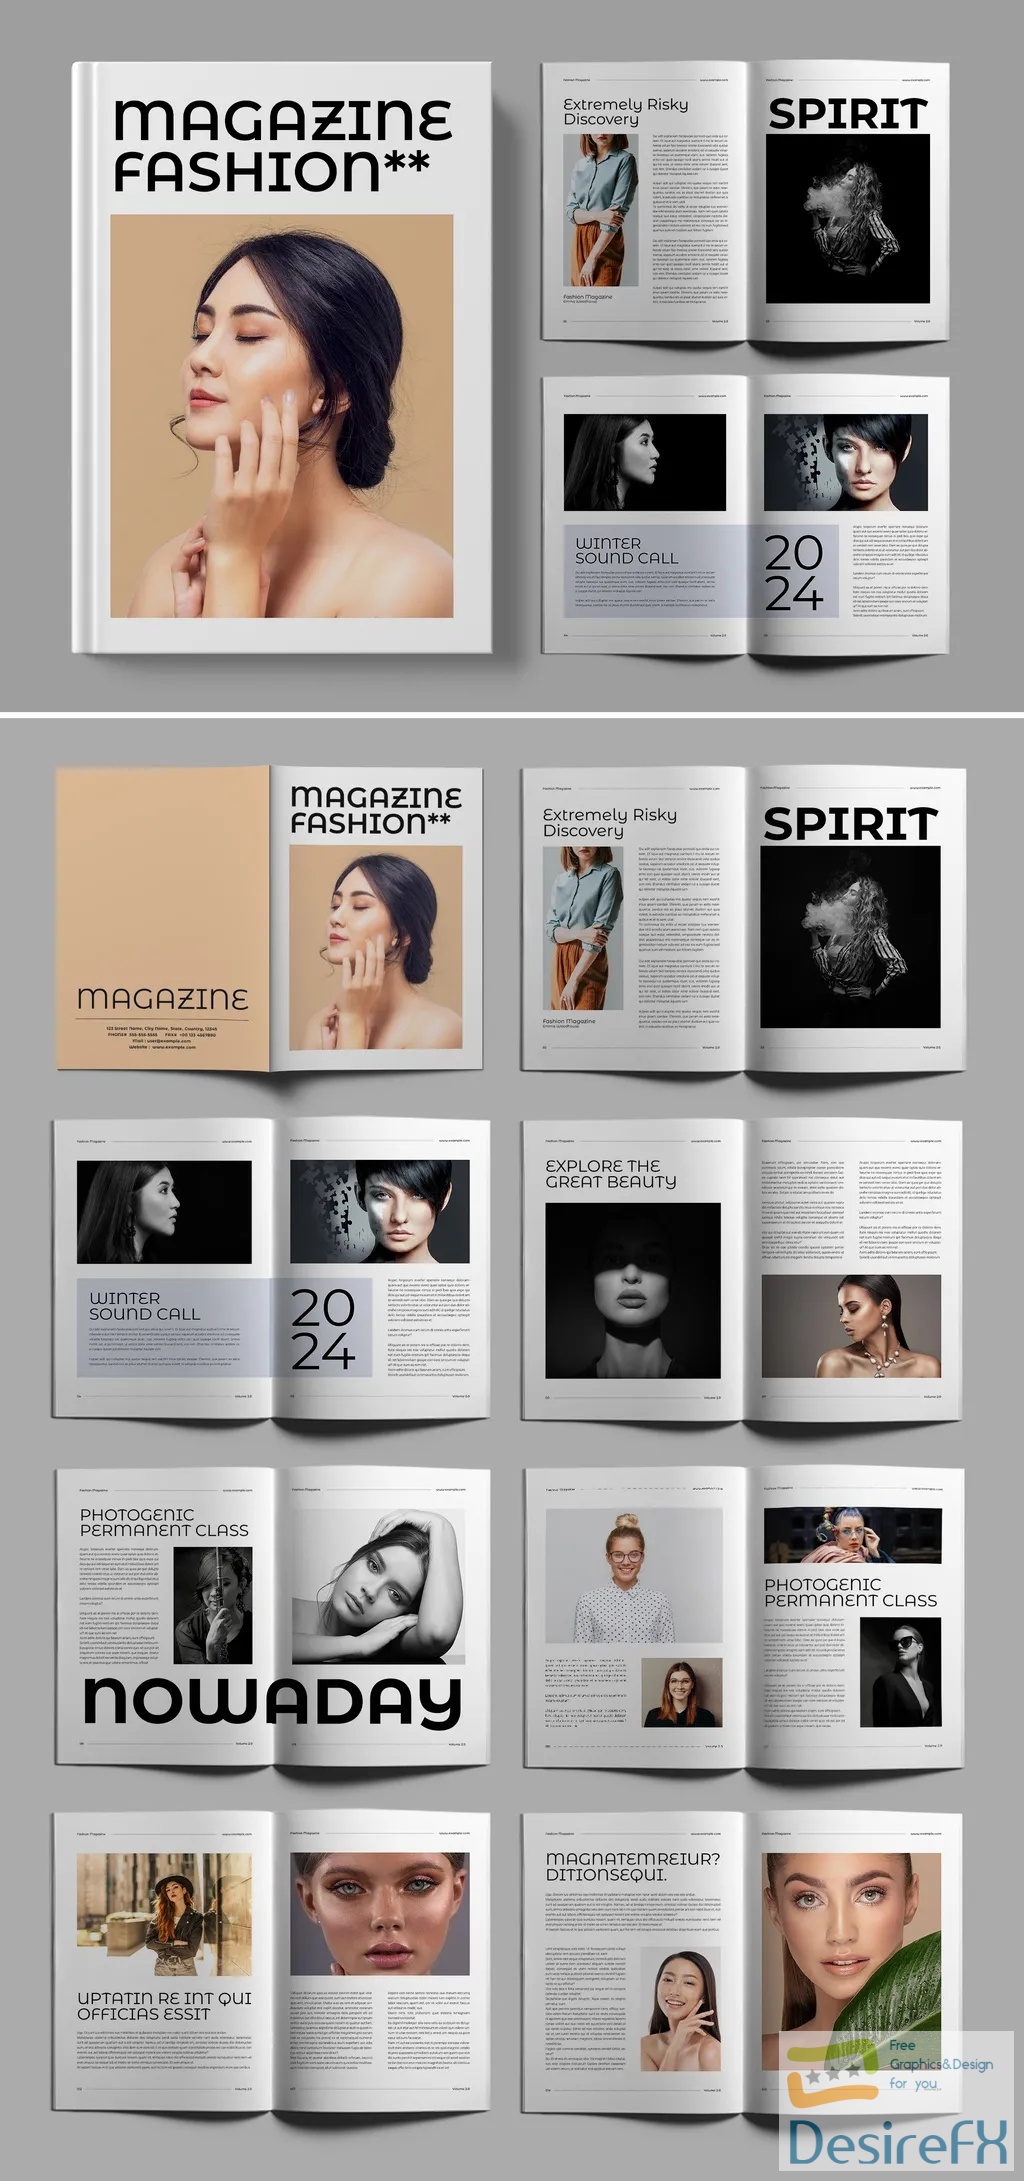 Adobestock - Fashion Magazine Template 718529830